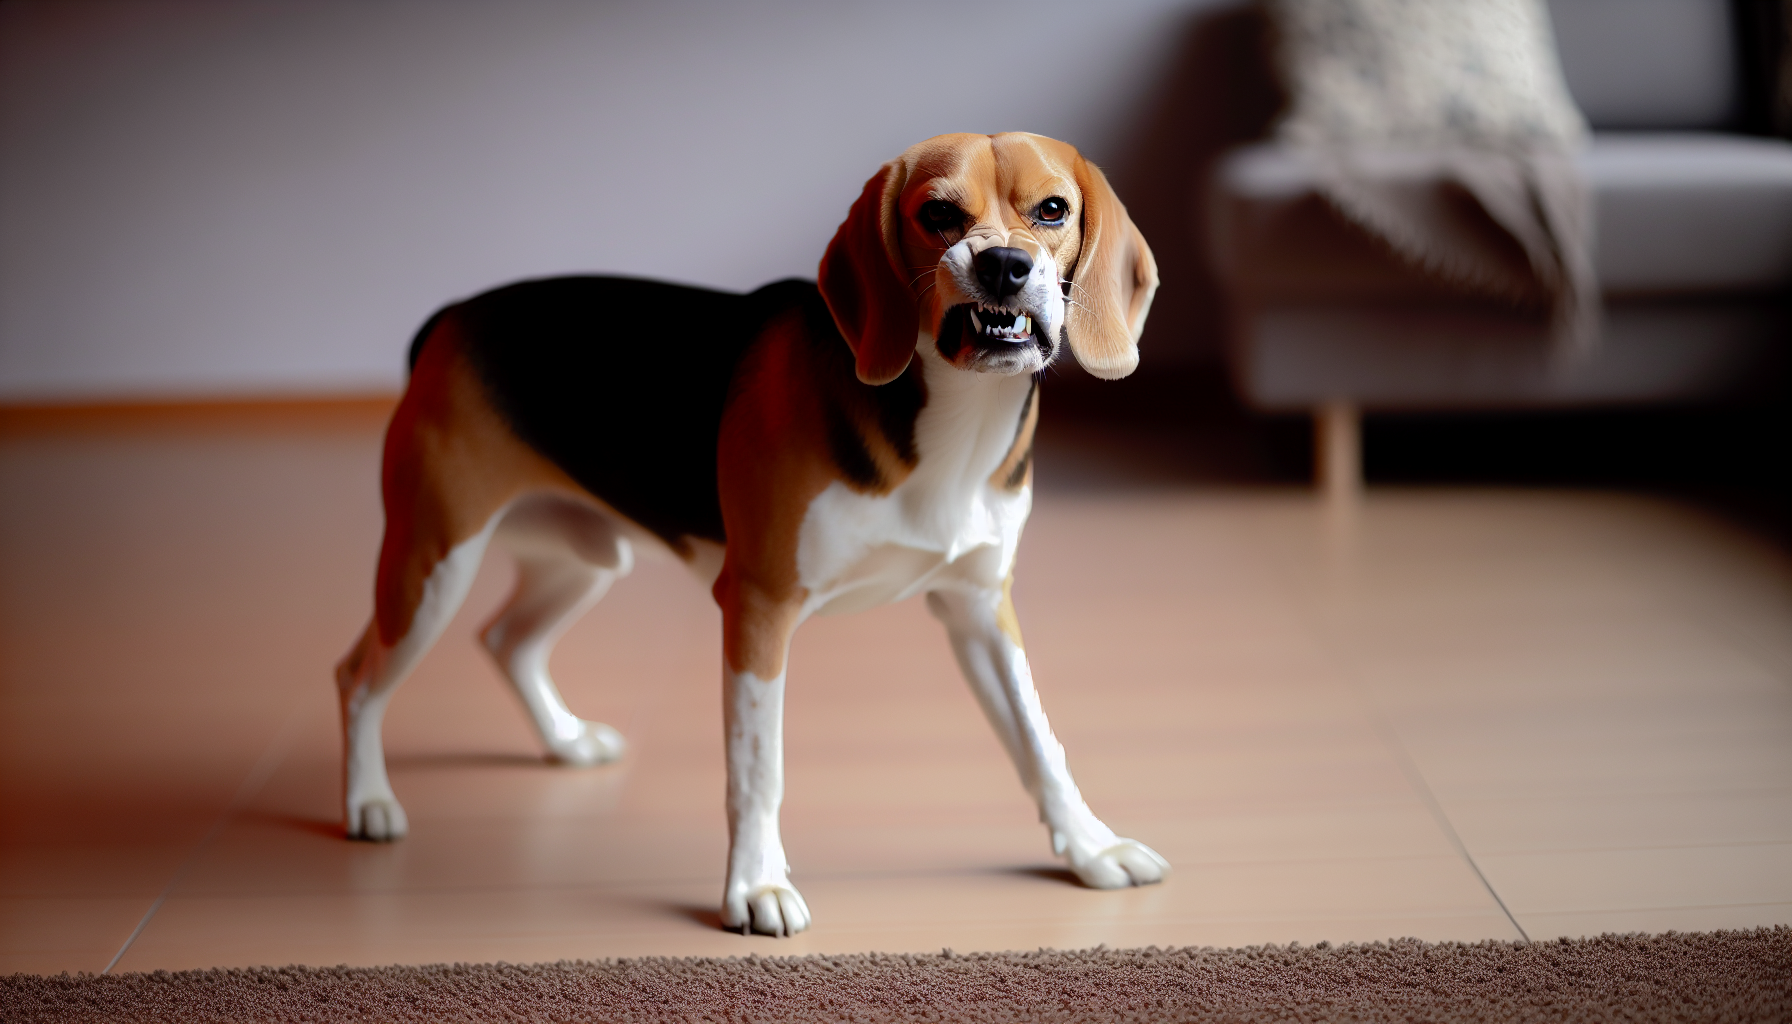 Beagle displaying aggressive body language